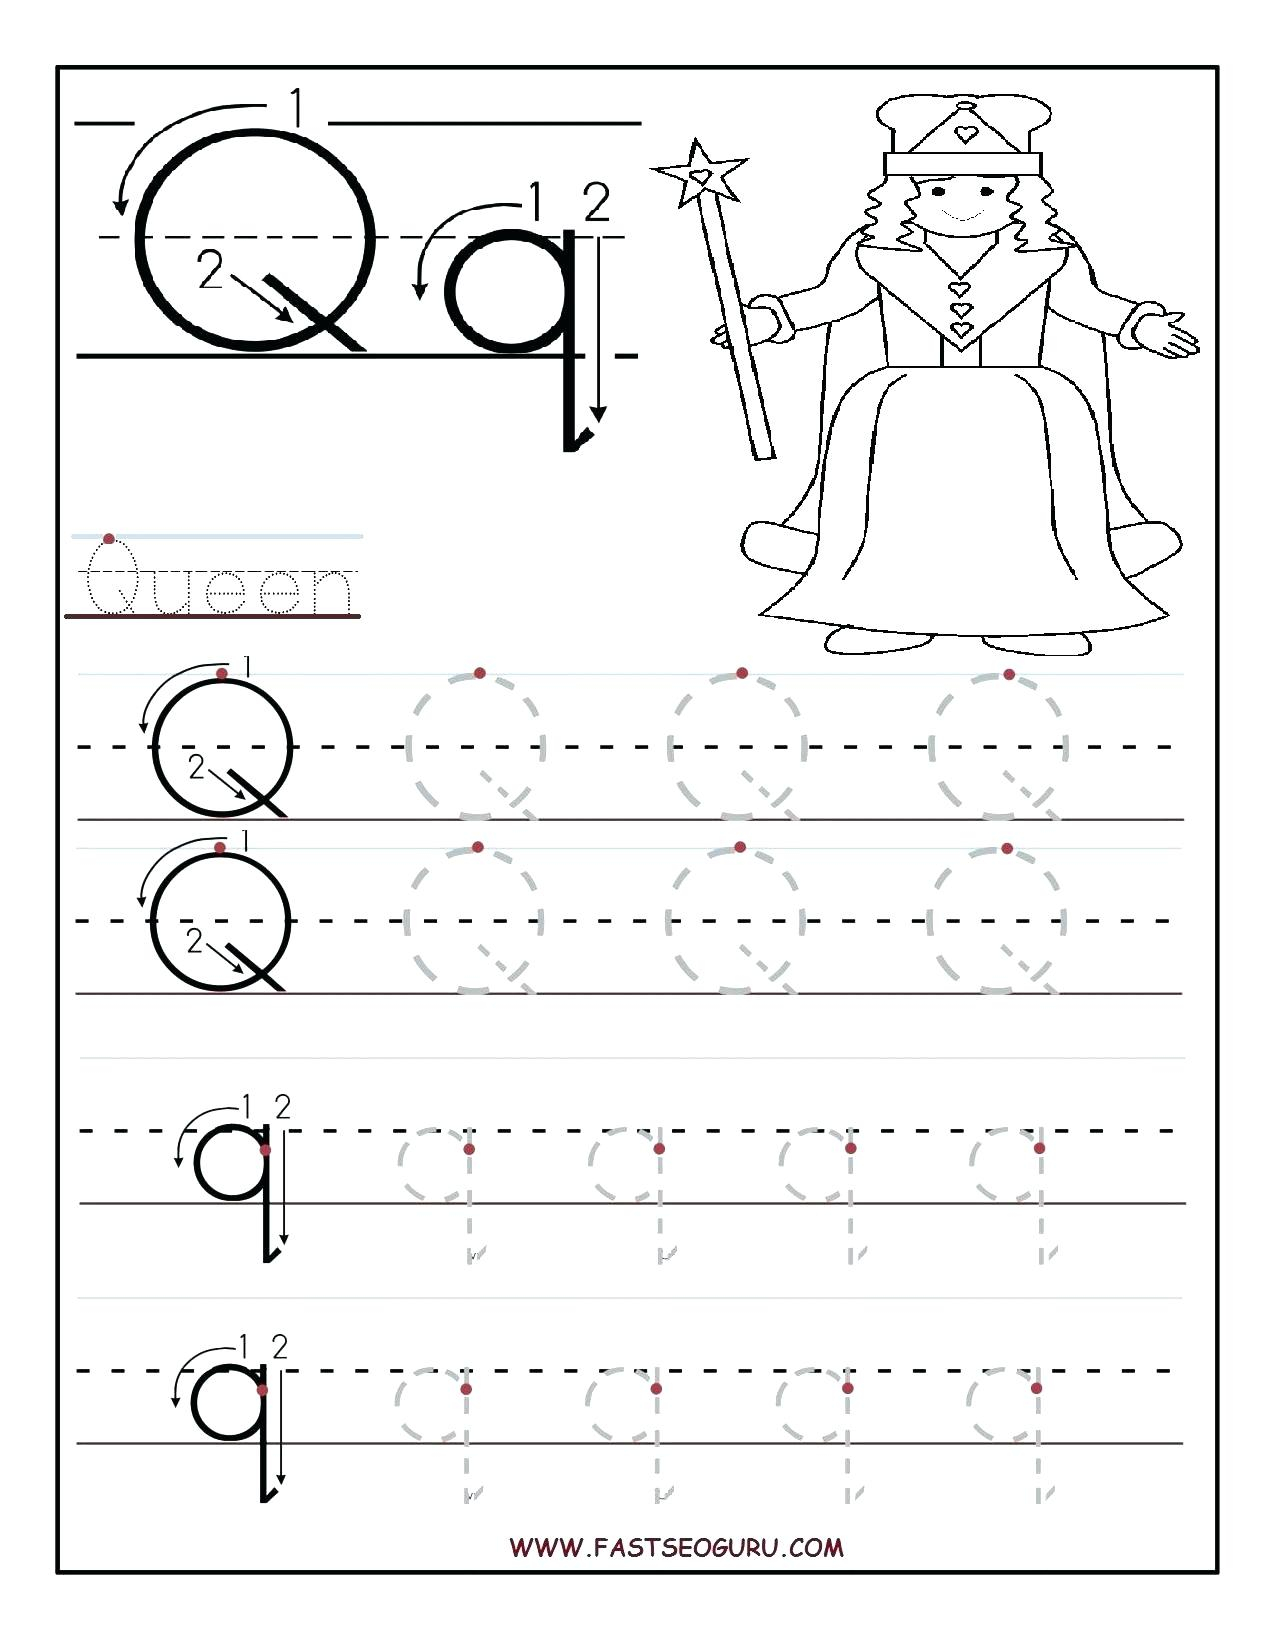 Letter P Tracing Worksheets For Preschool TracingLettersWorksheets